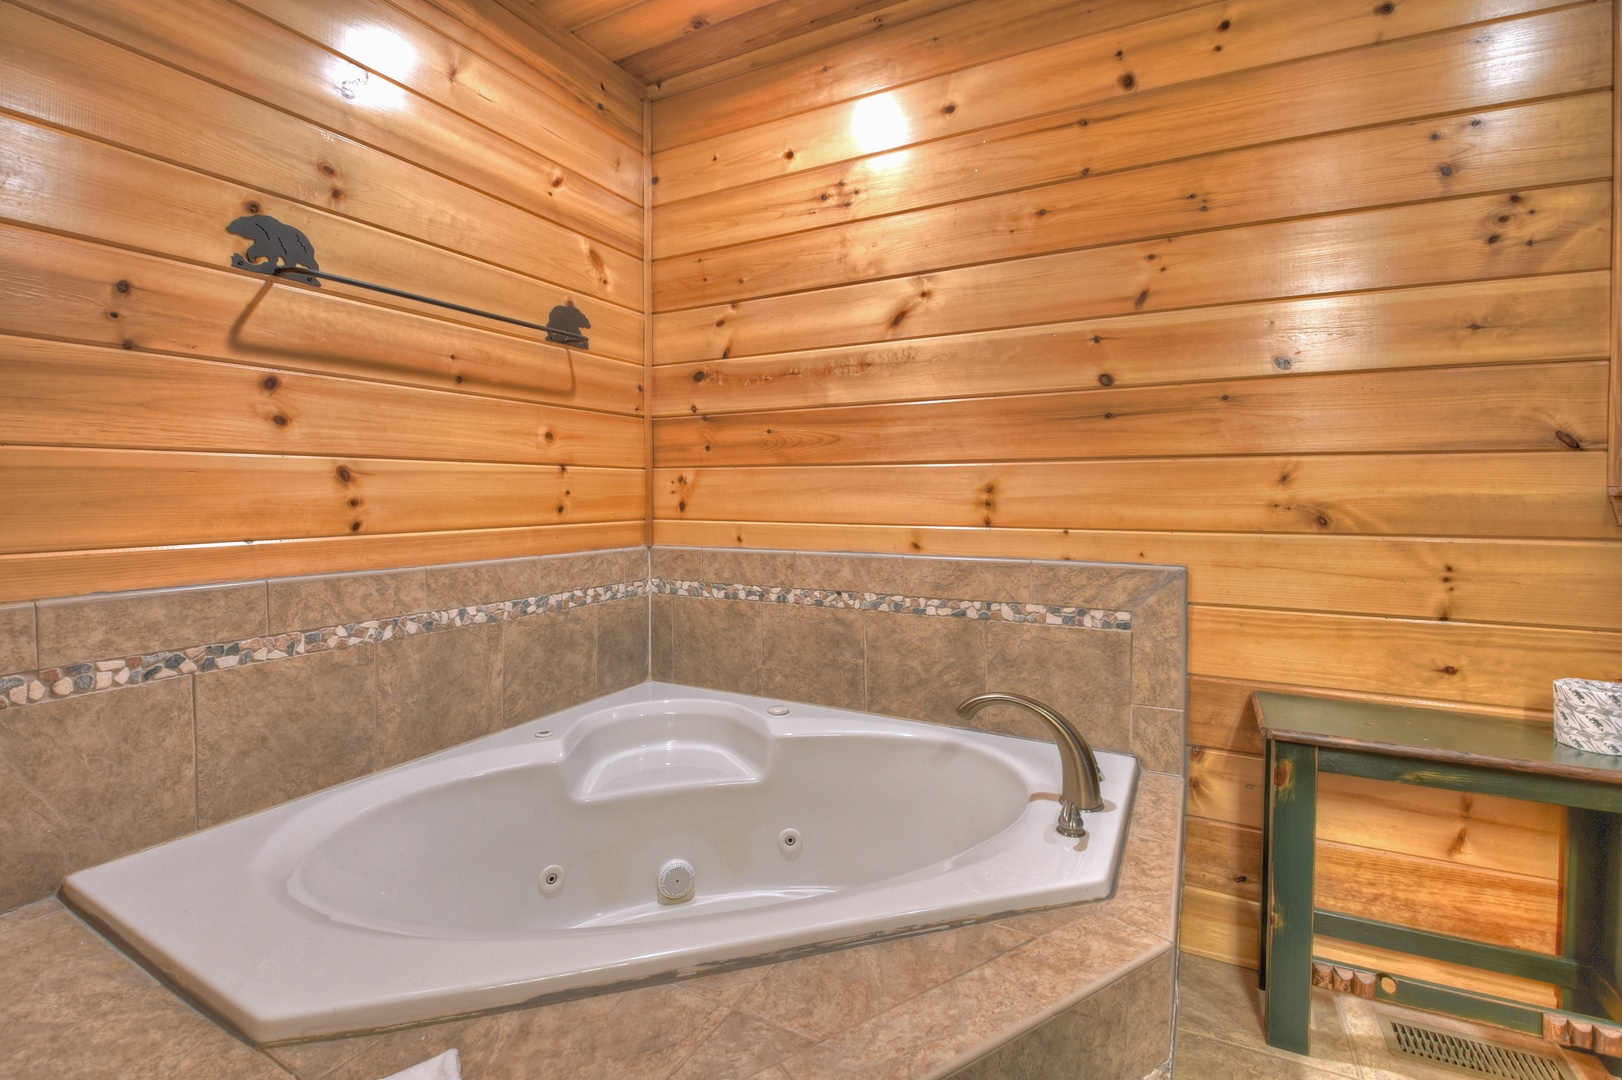 Hibernation Station - Entry level bathroom with soaker tub